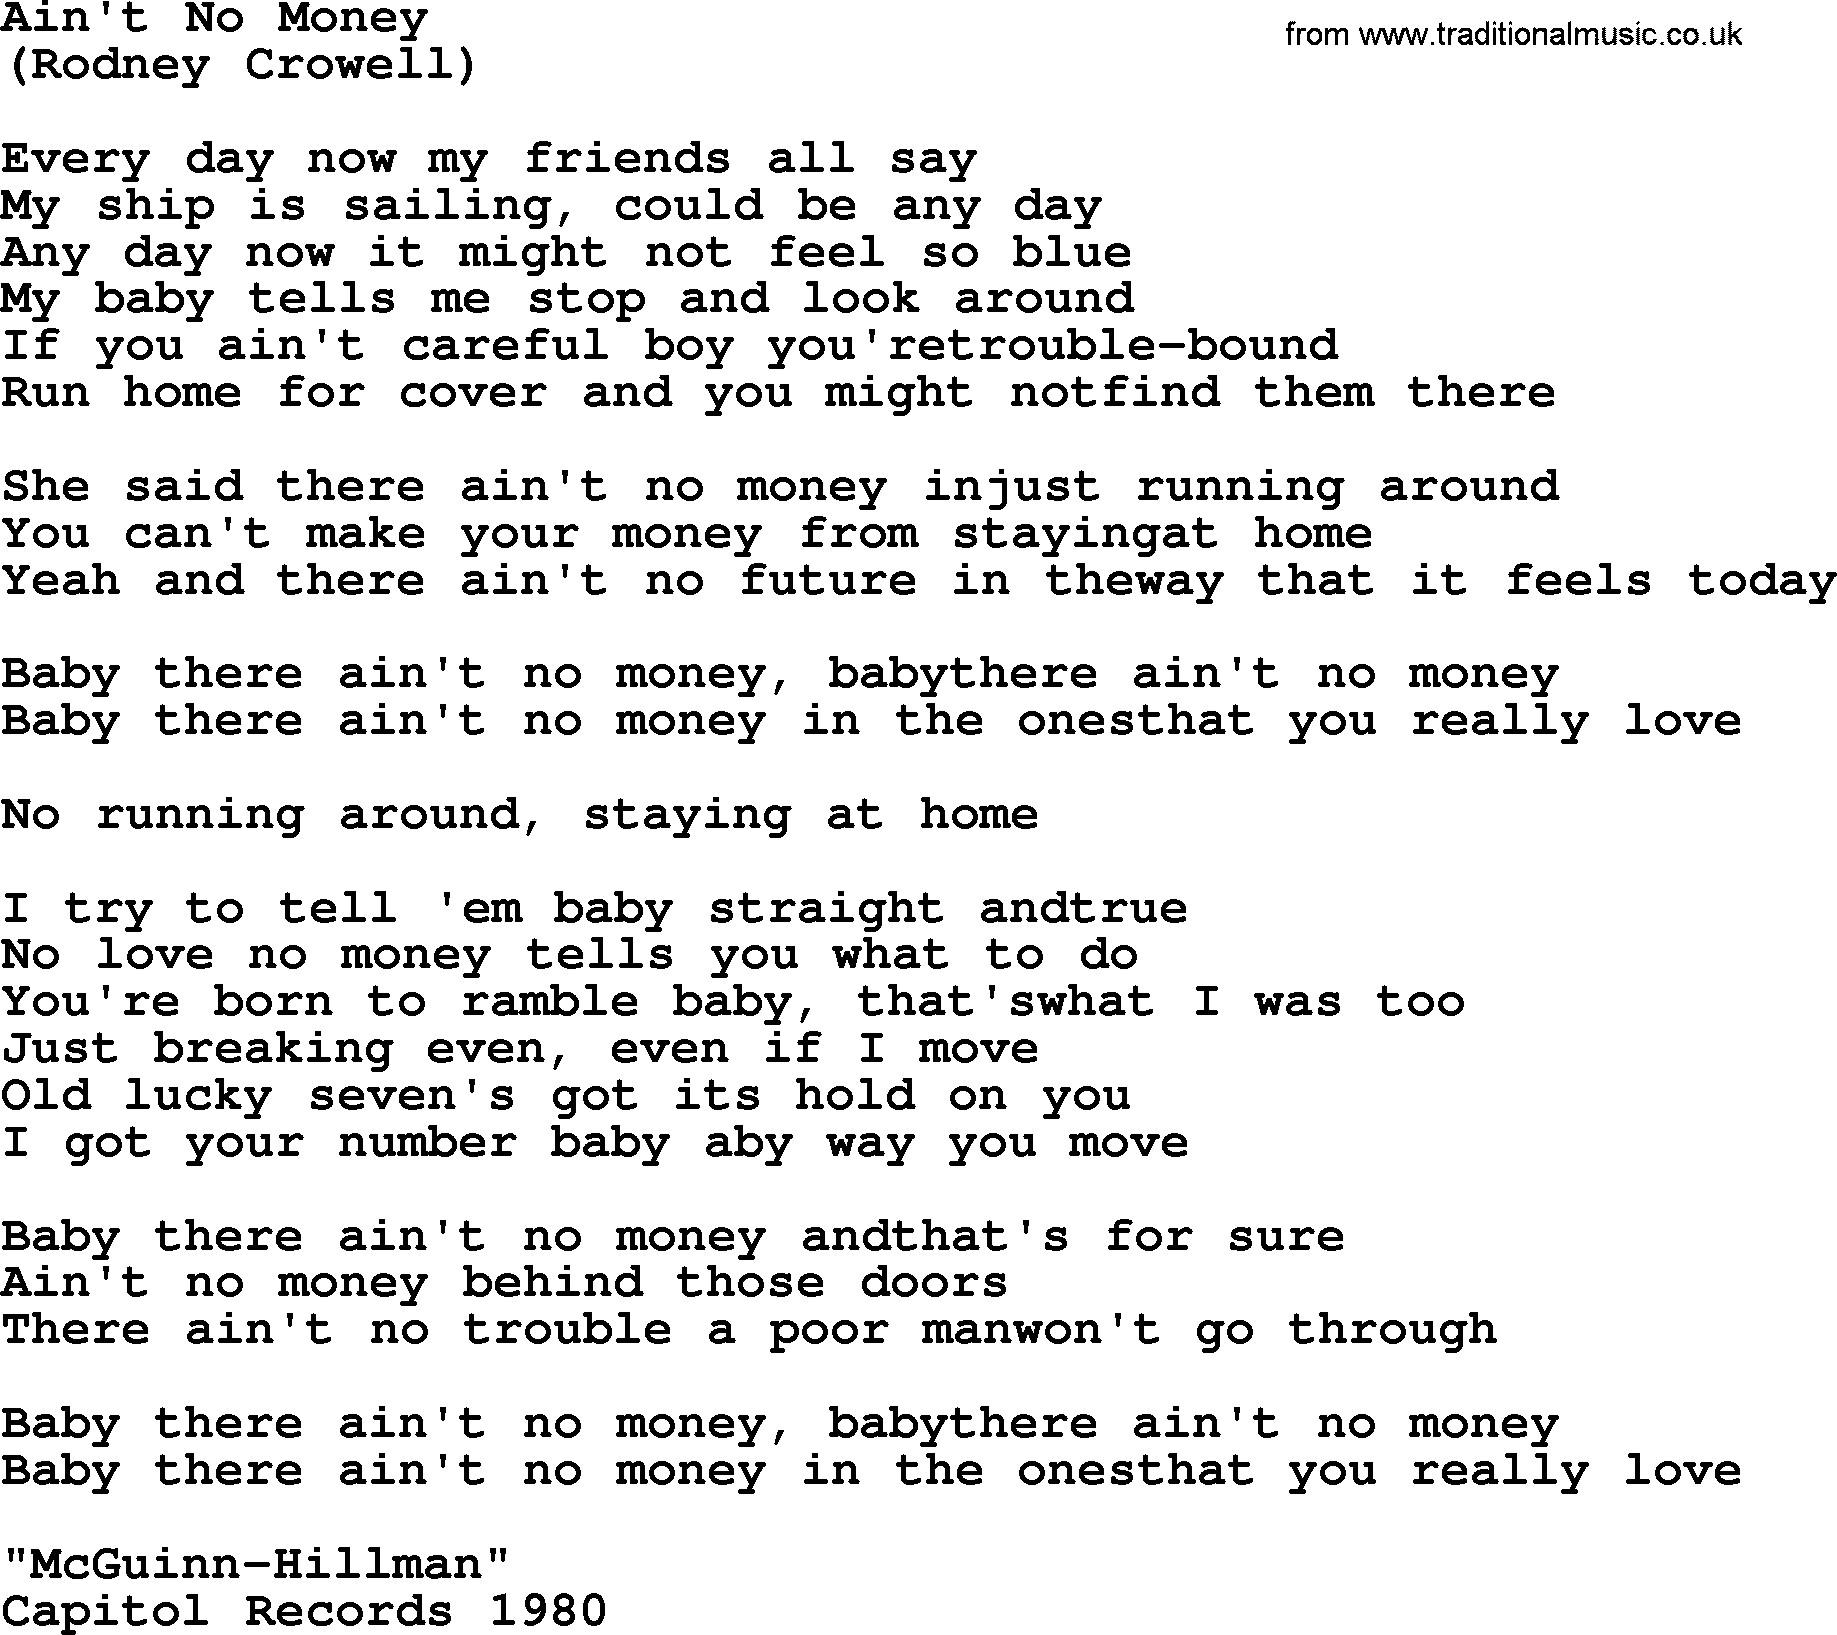 The Byrds song Ain't No Money, lyrics